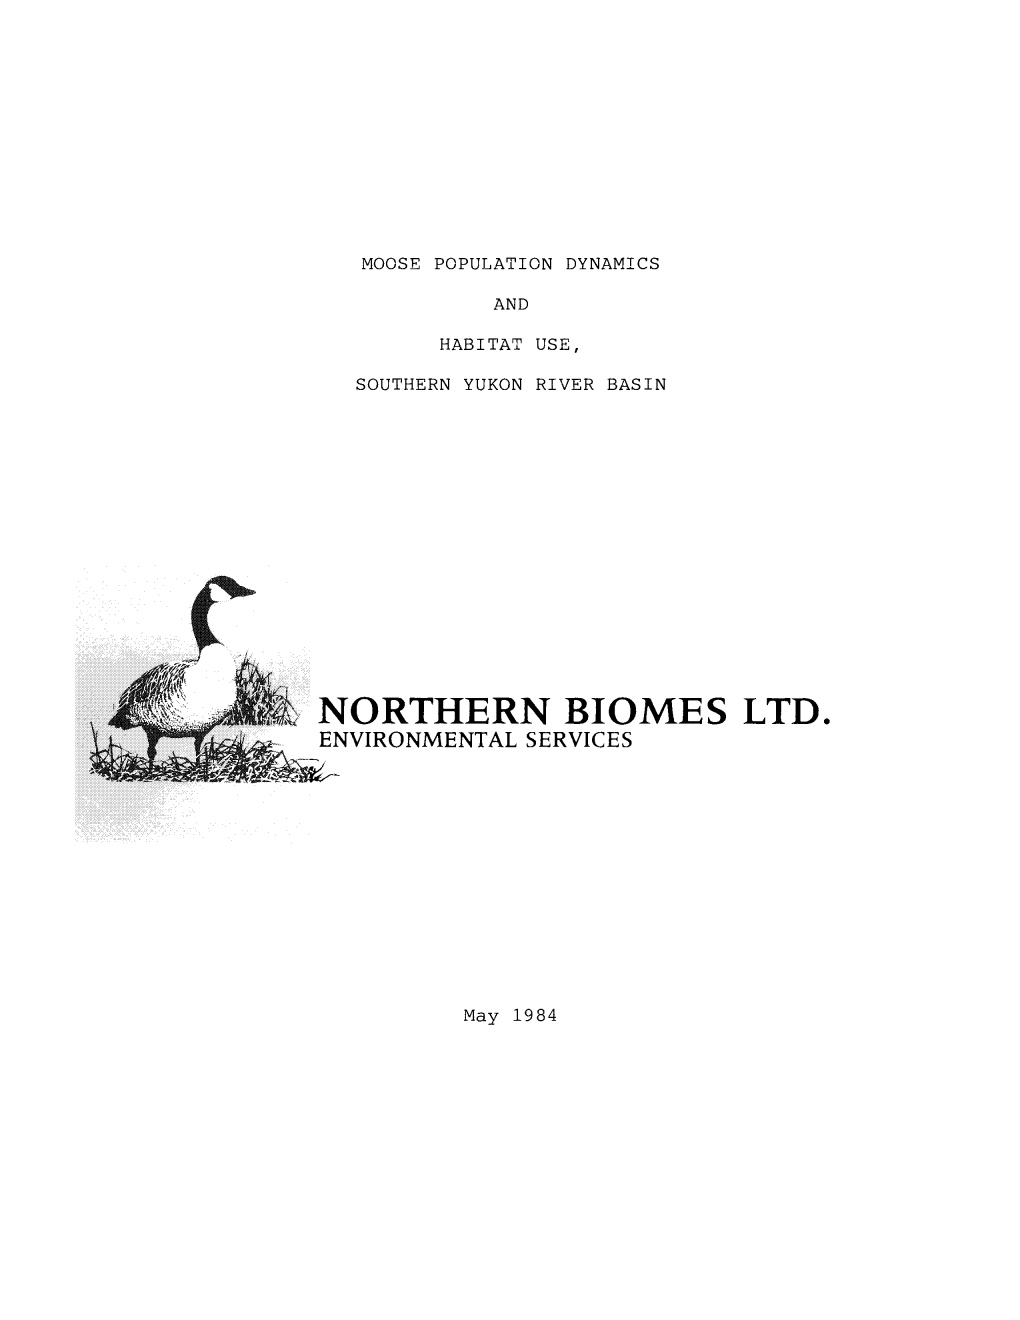 Northern Biomes Ltd. Environmental Services